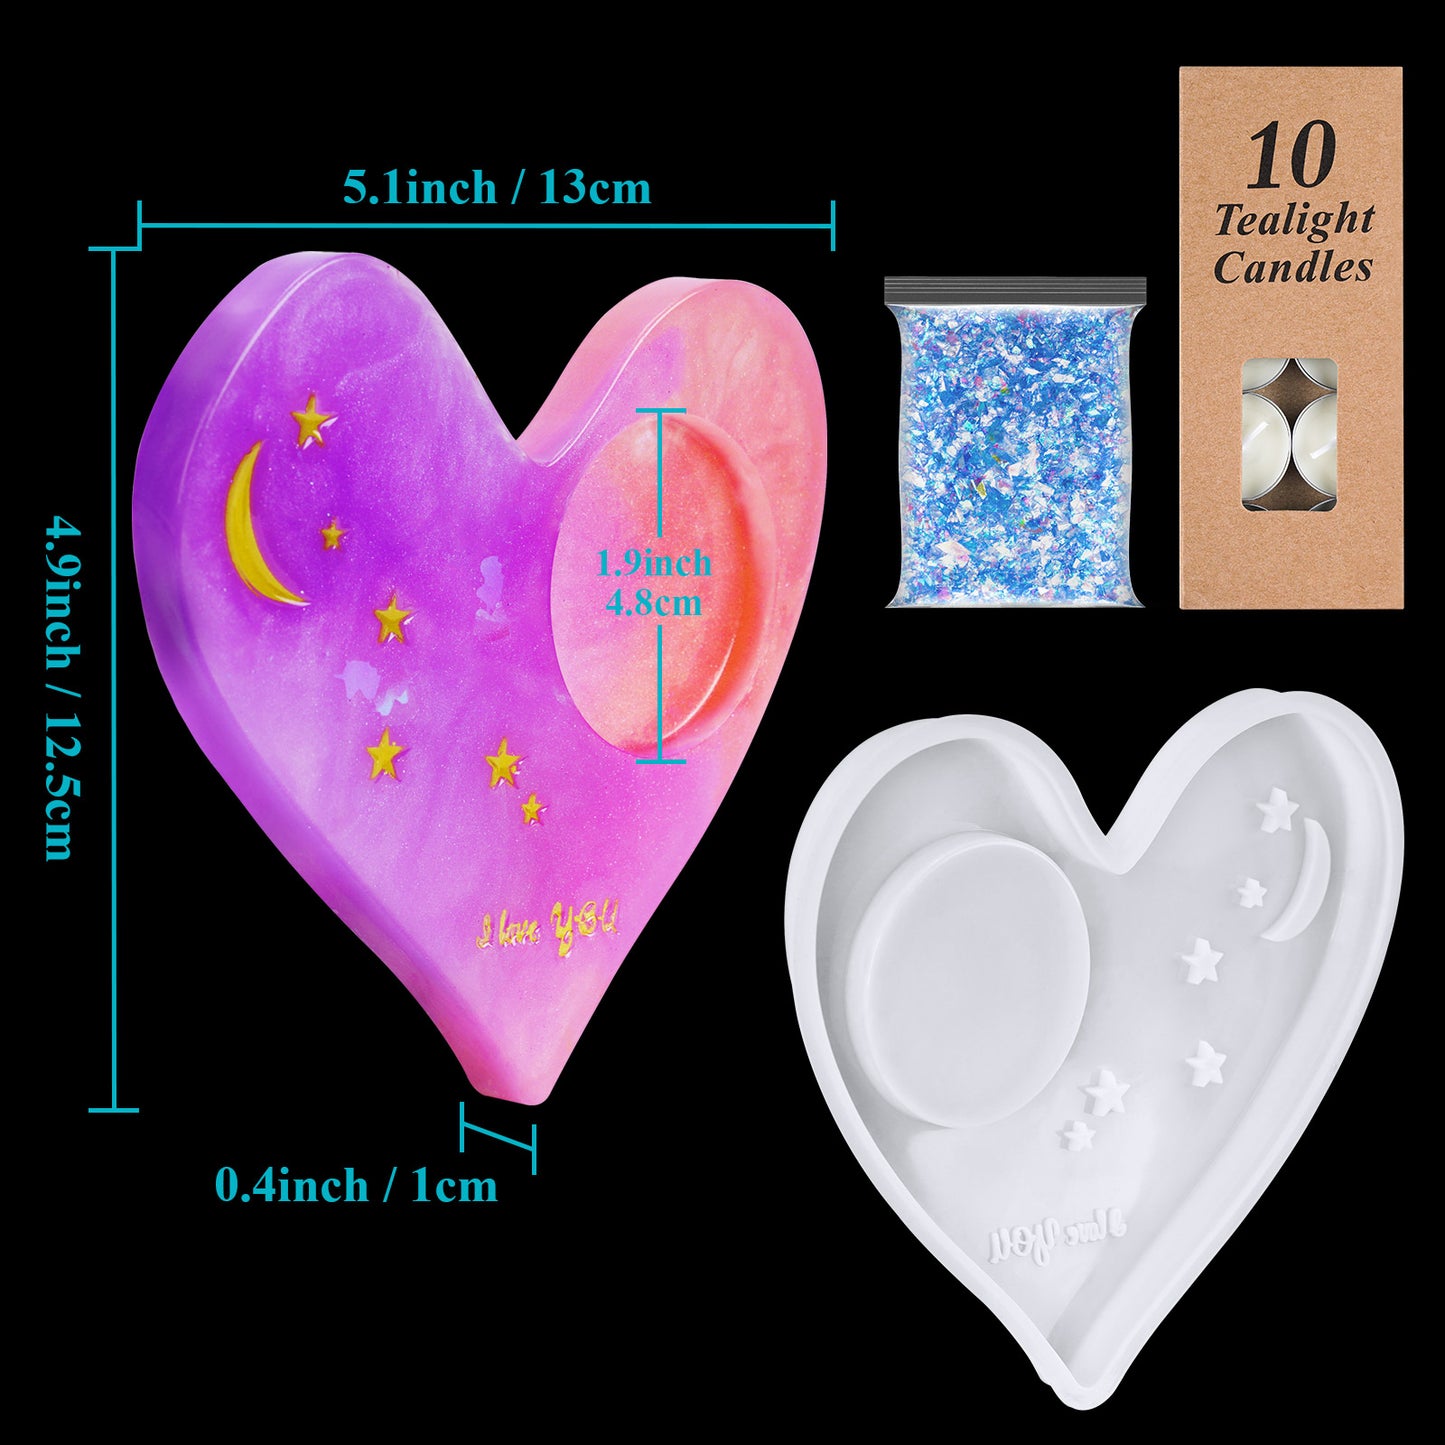 Epoxy Resin DIY Casting Silicone Mold Kit Heart Shaped Candle Holder+10PCS Tea